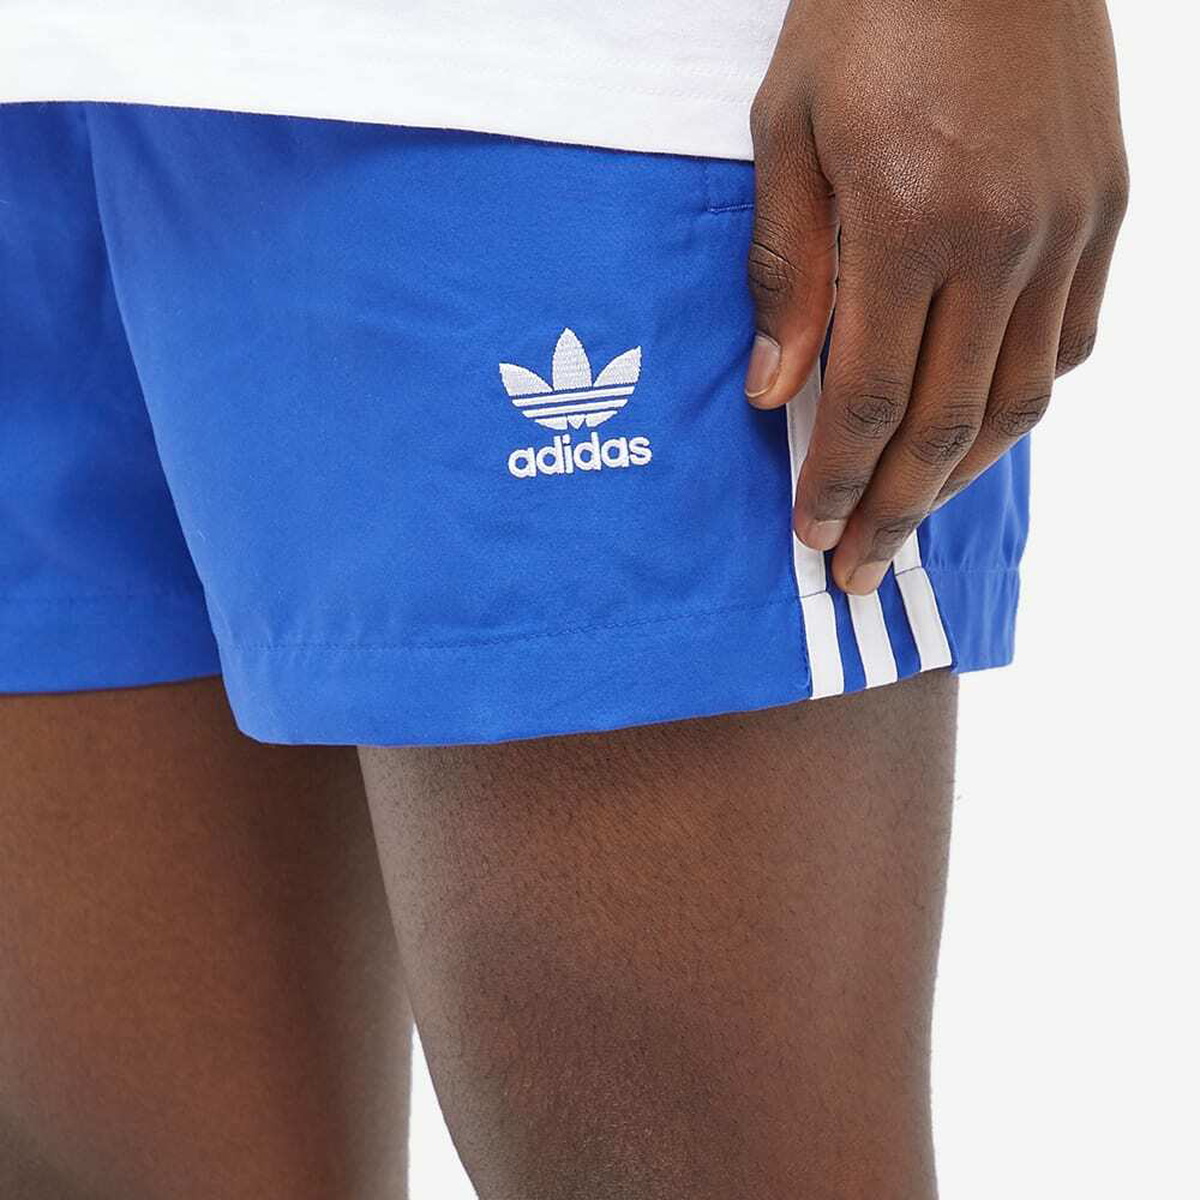 Adidas Men's Ori 3S VSL Short in Semi Lucid Blue/White adidas